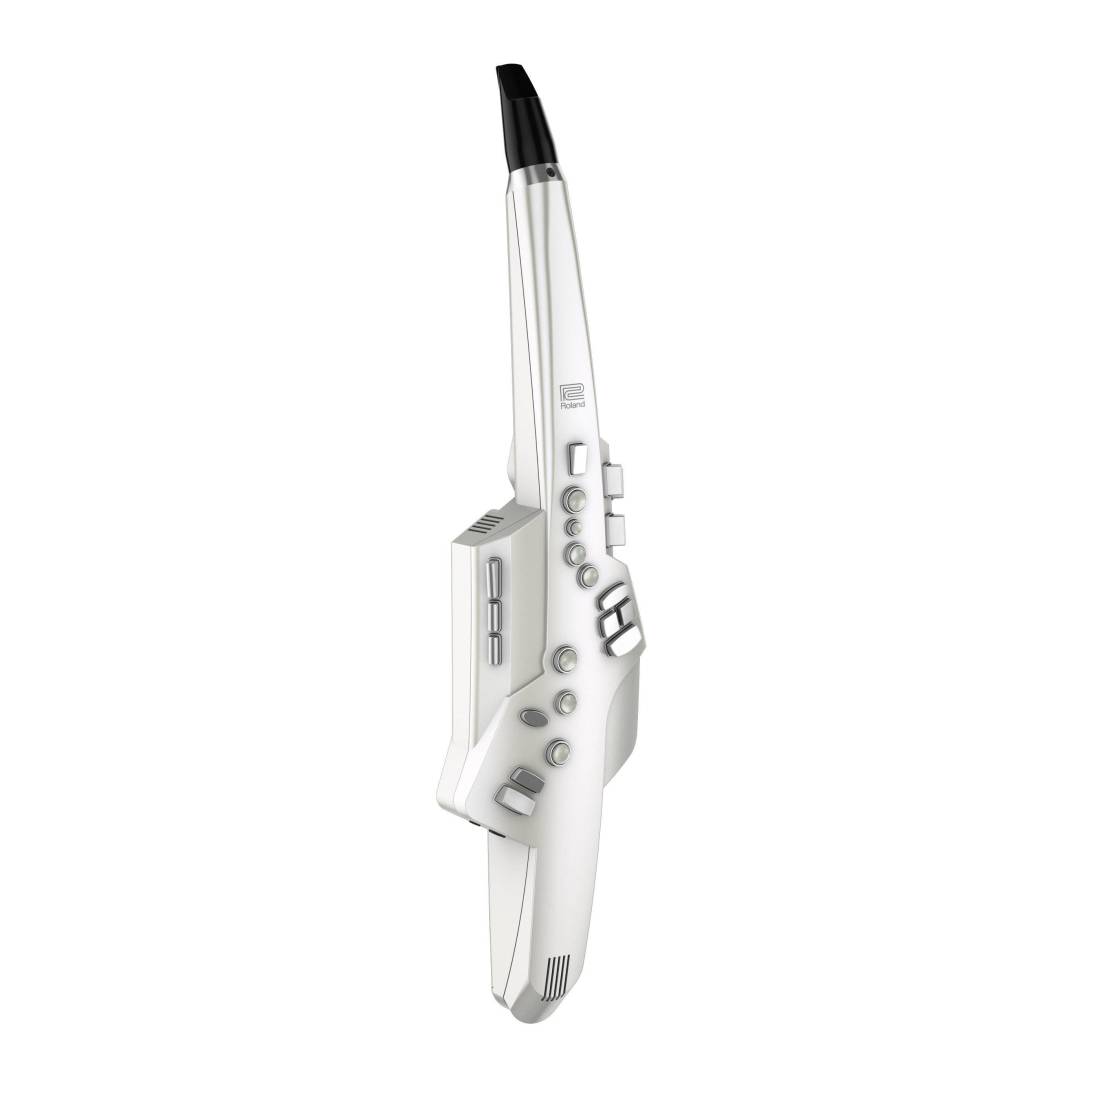 Aerophone AE-10 Digital Wind Instrument - White